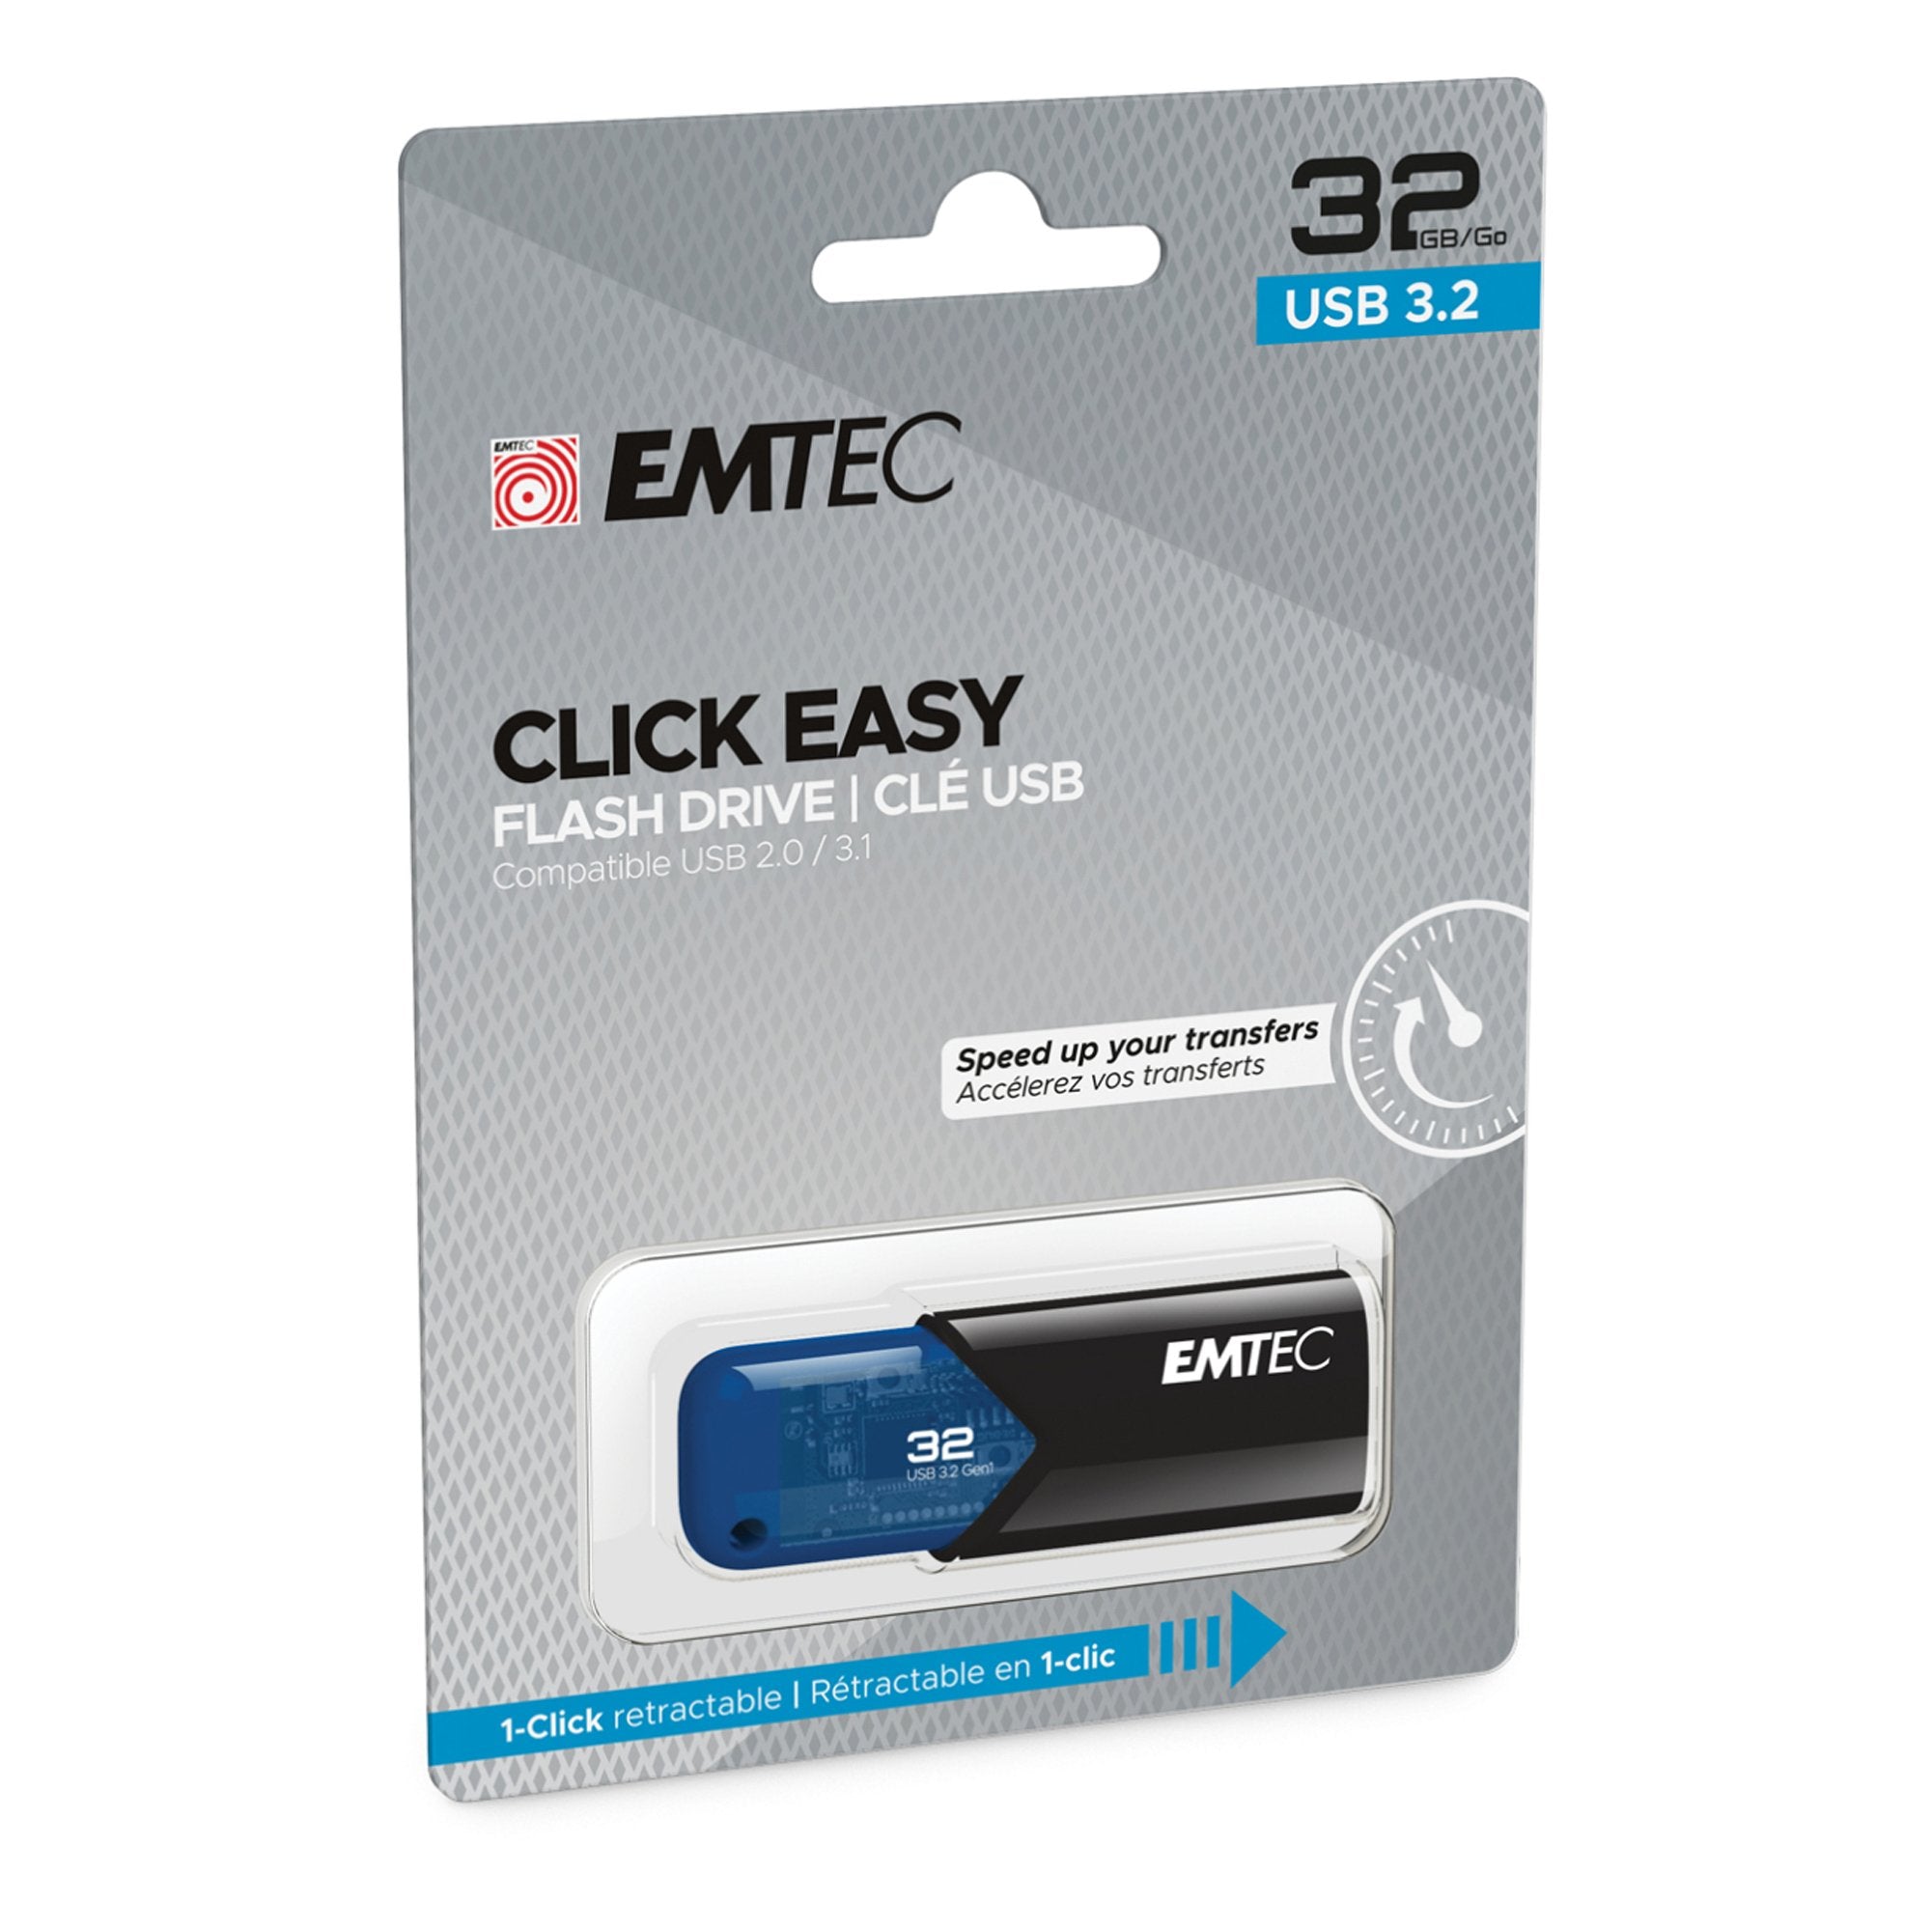 emtec-memoria-usb-b110-usb3-2-clickeasy-32gb-blu